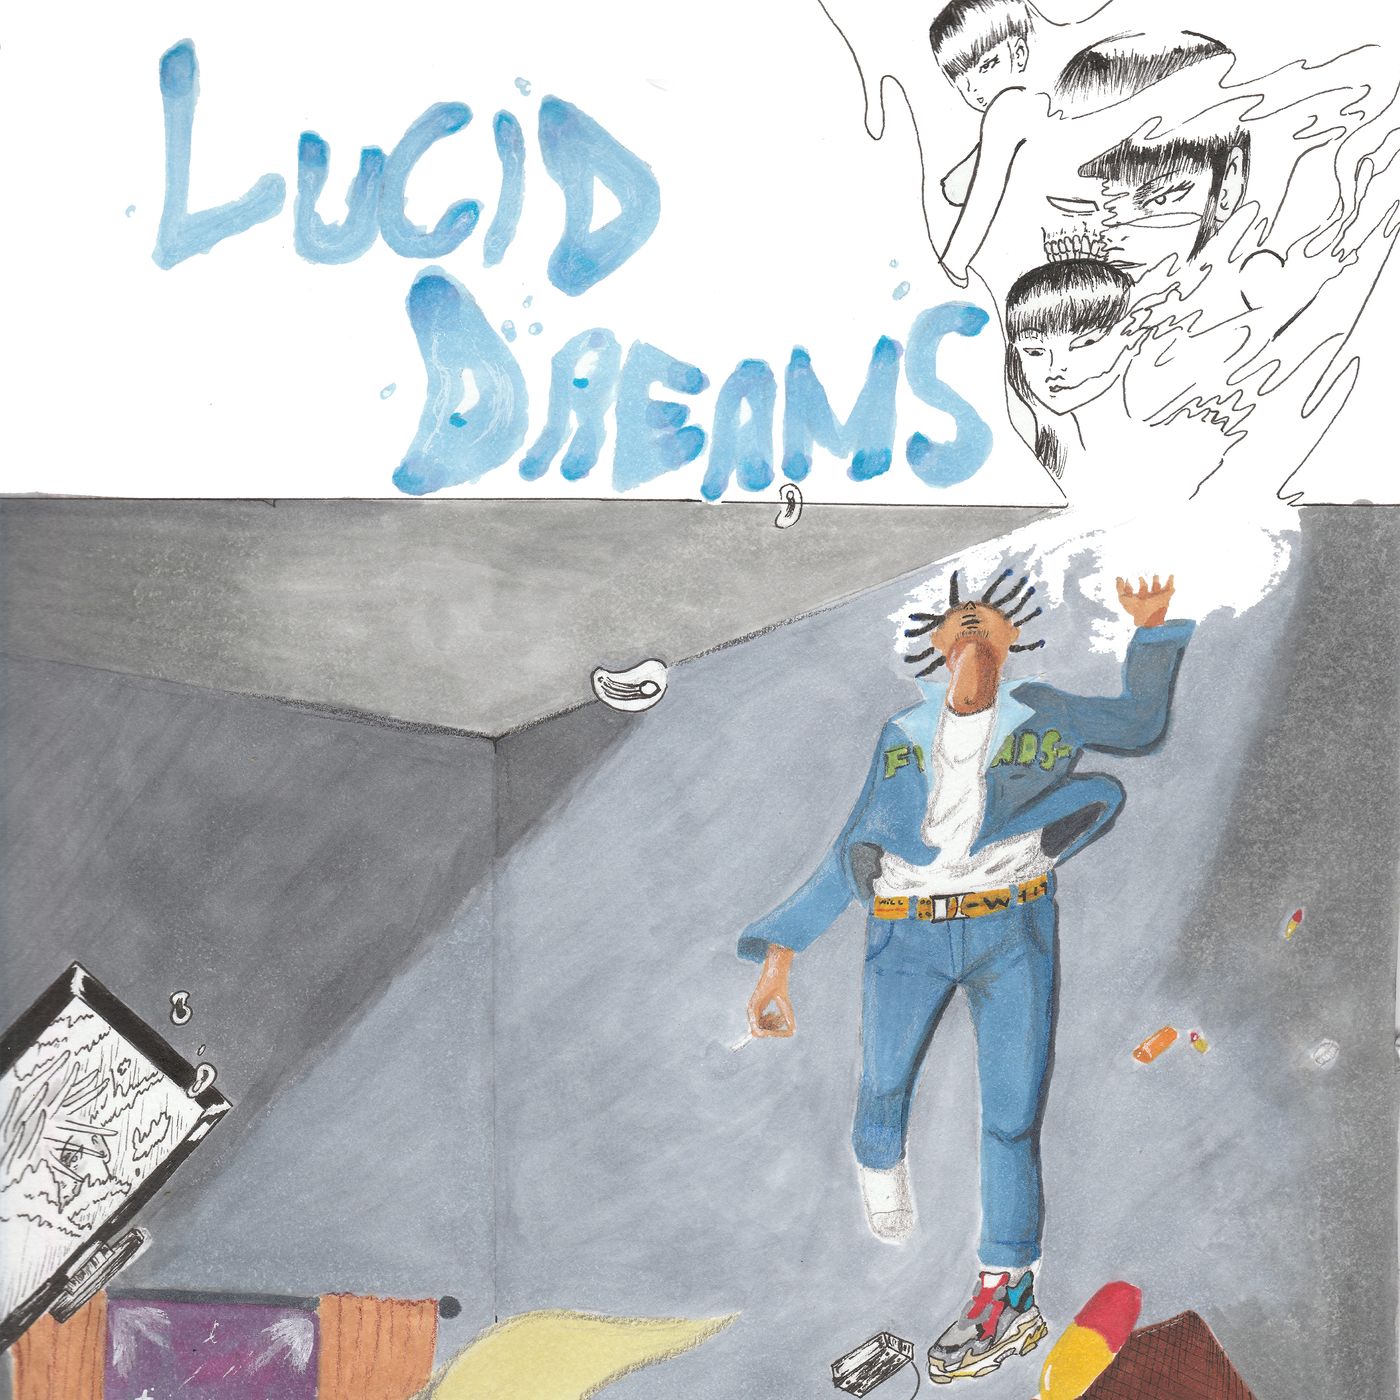 Listen Free to Juice WRLD - Lucid Dreams Radio _ iHeartRadio.jpg